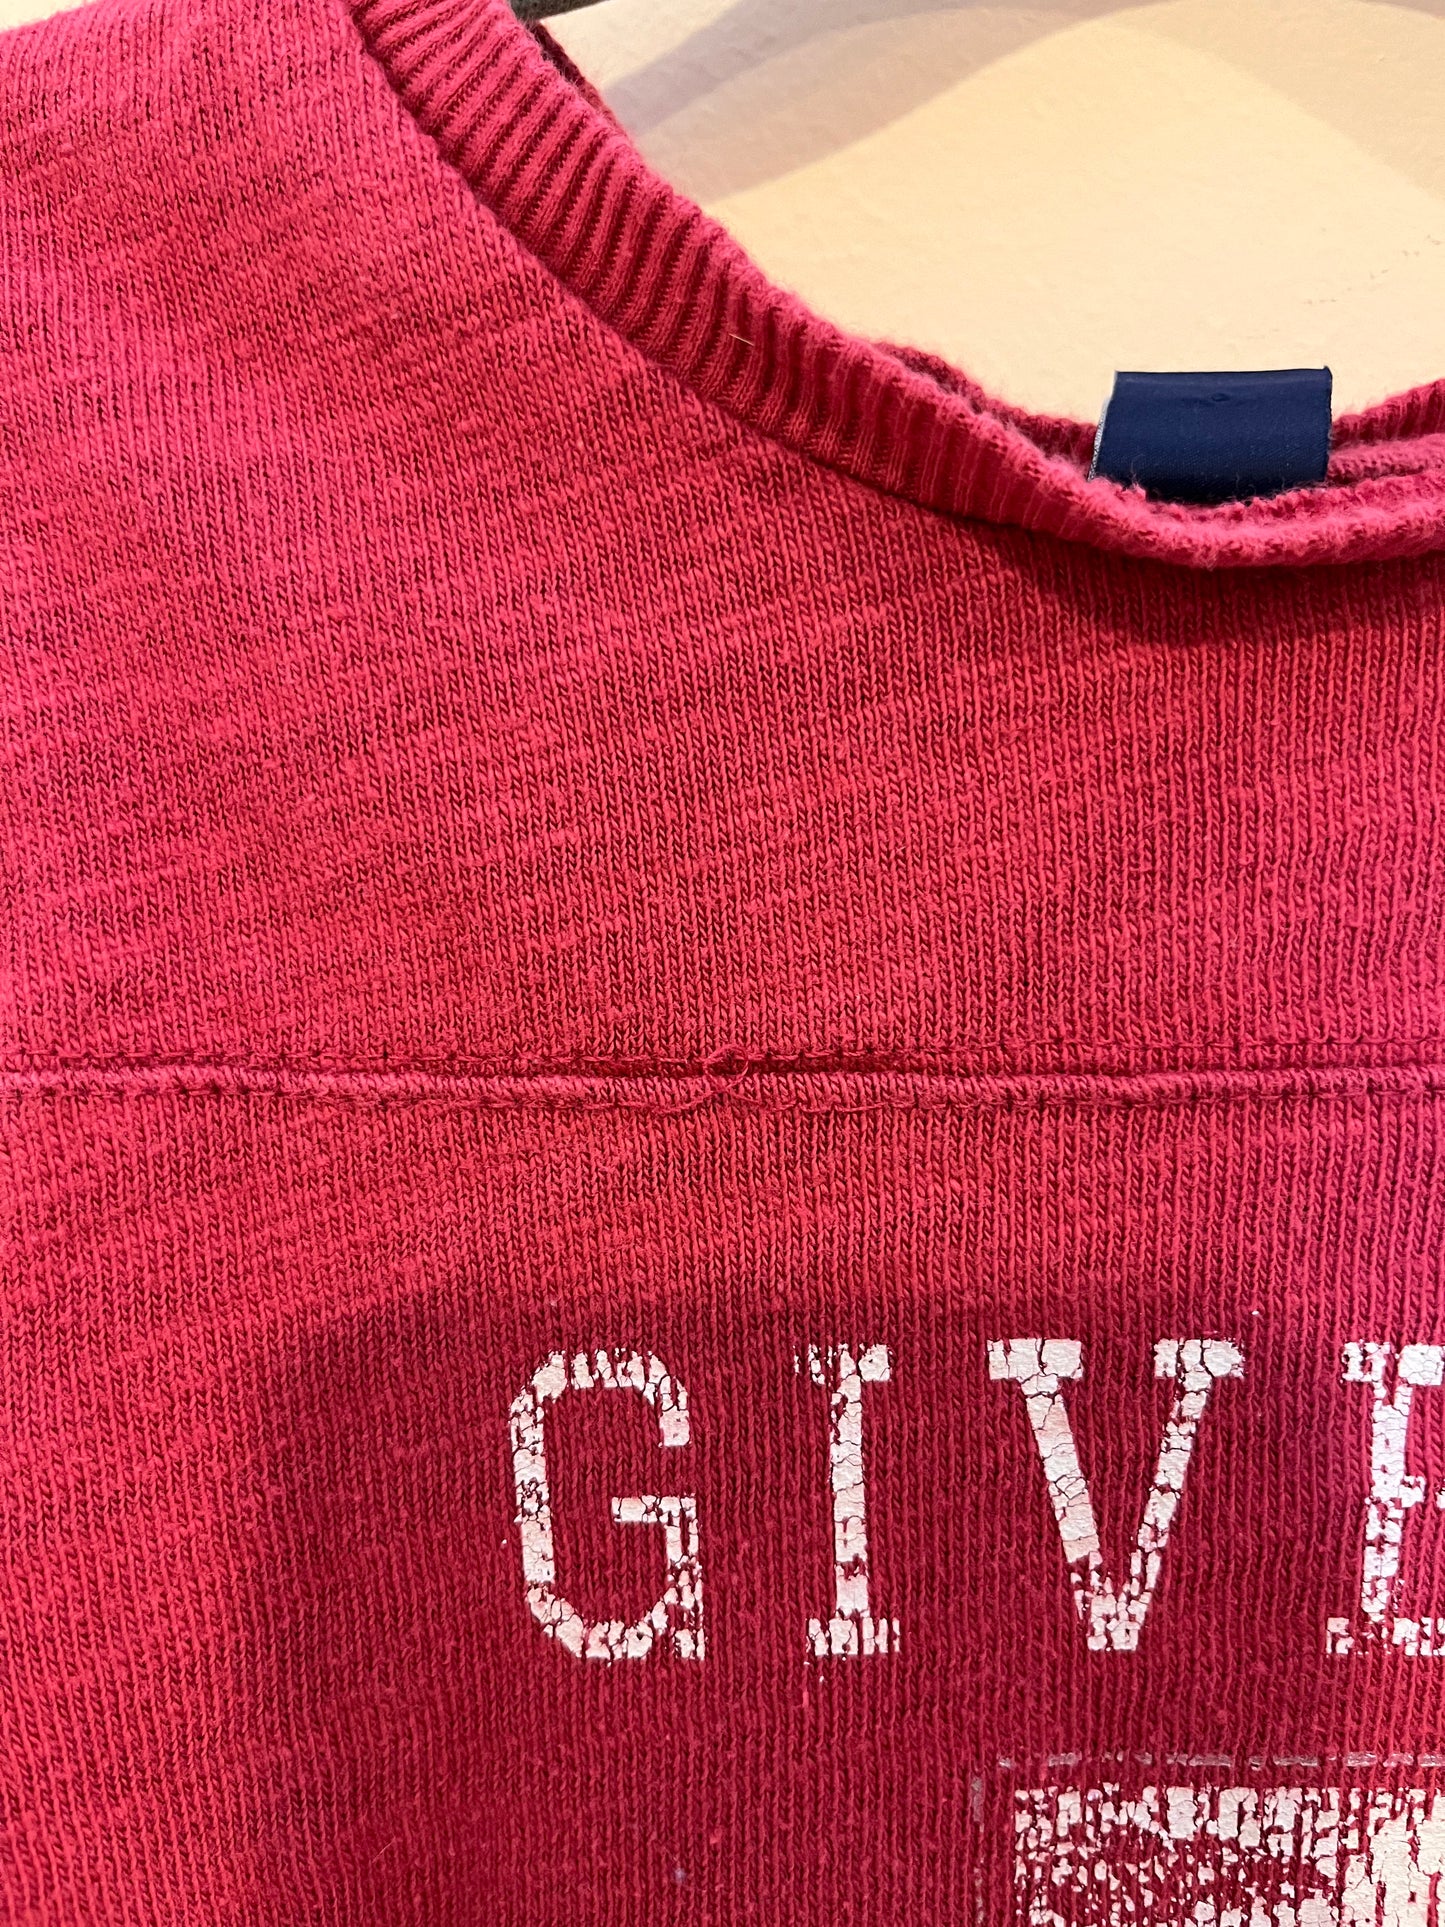 Gap "Give Me 5" Long-Sleeved Dress (4T)